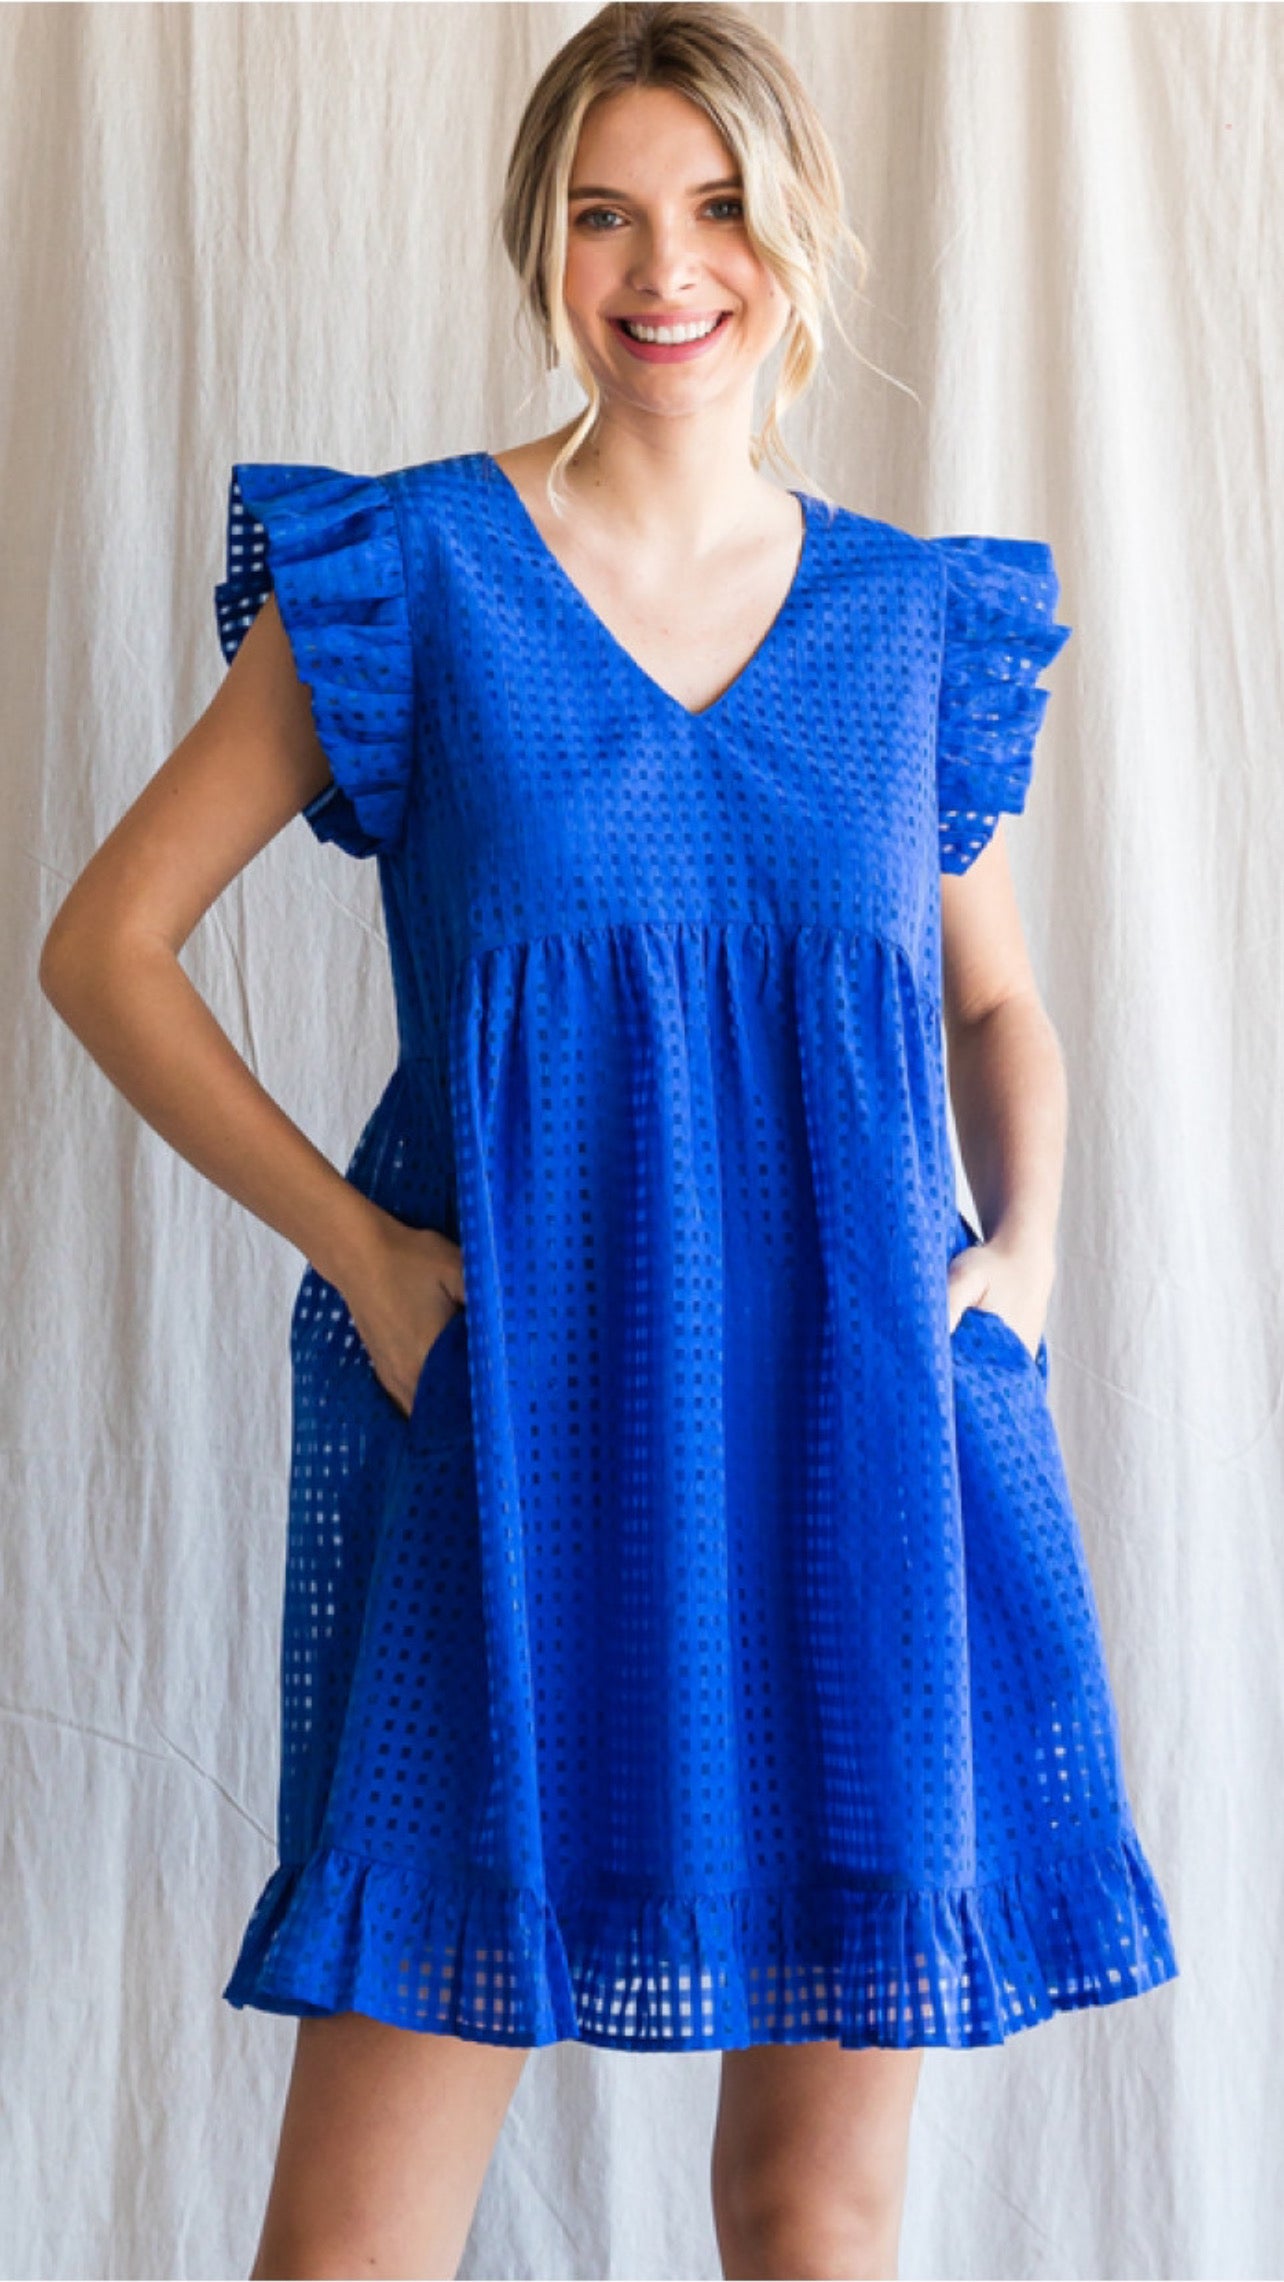 The Royal Blue Phoebe Dress